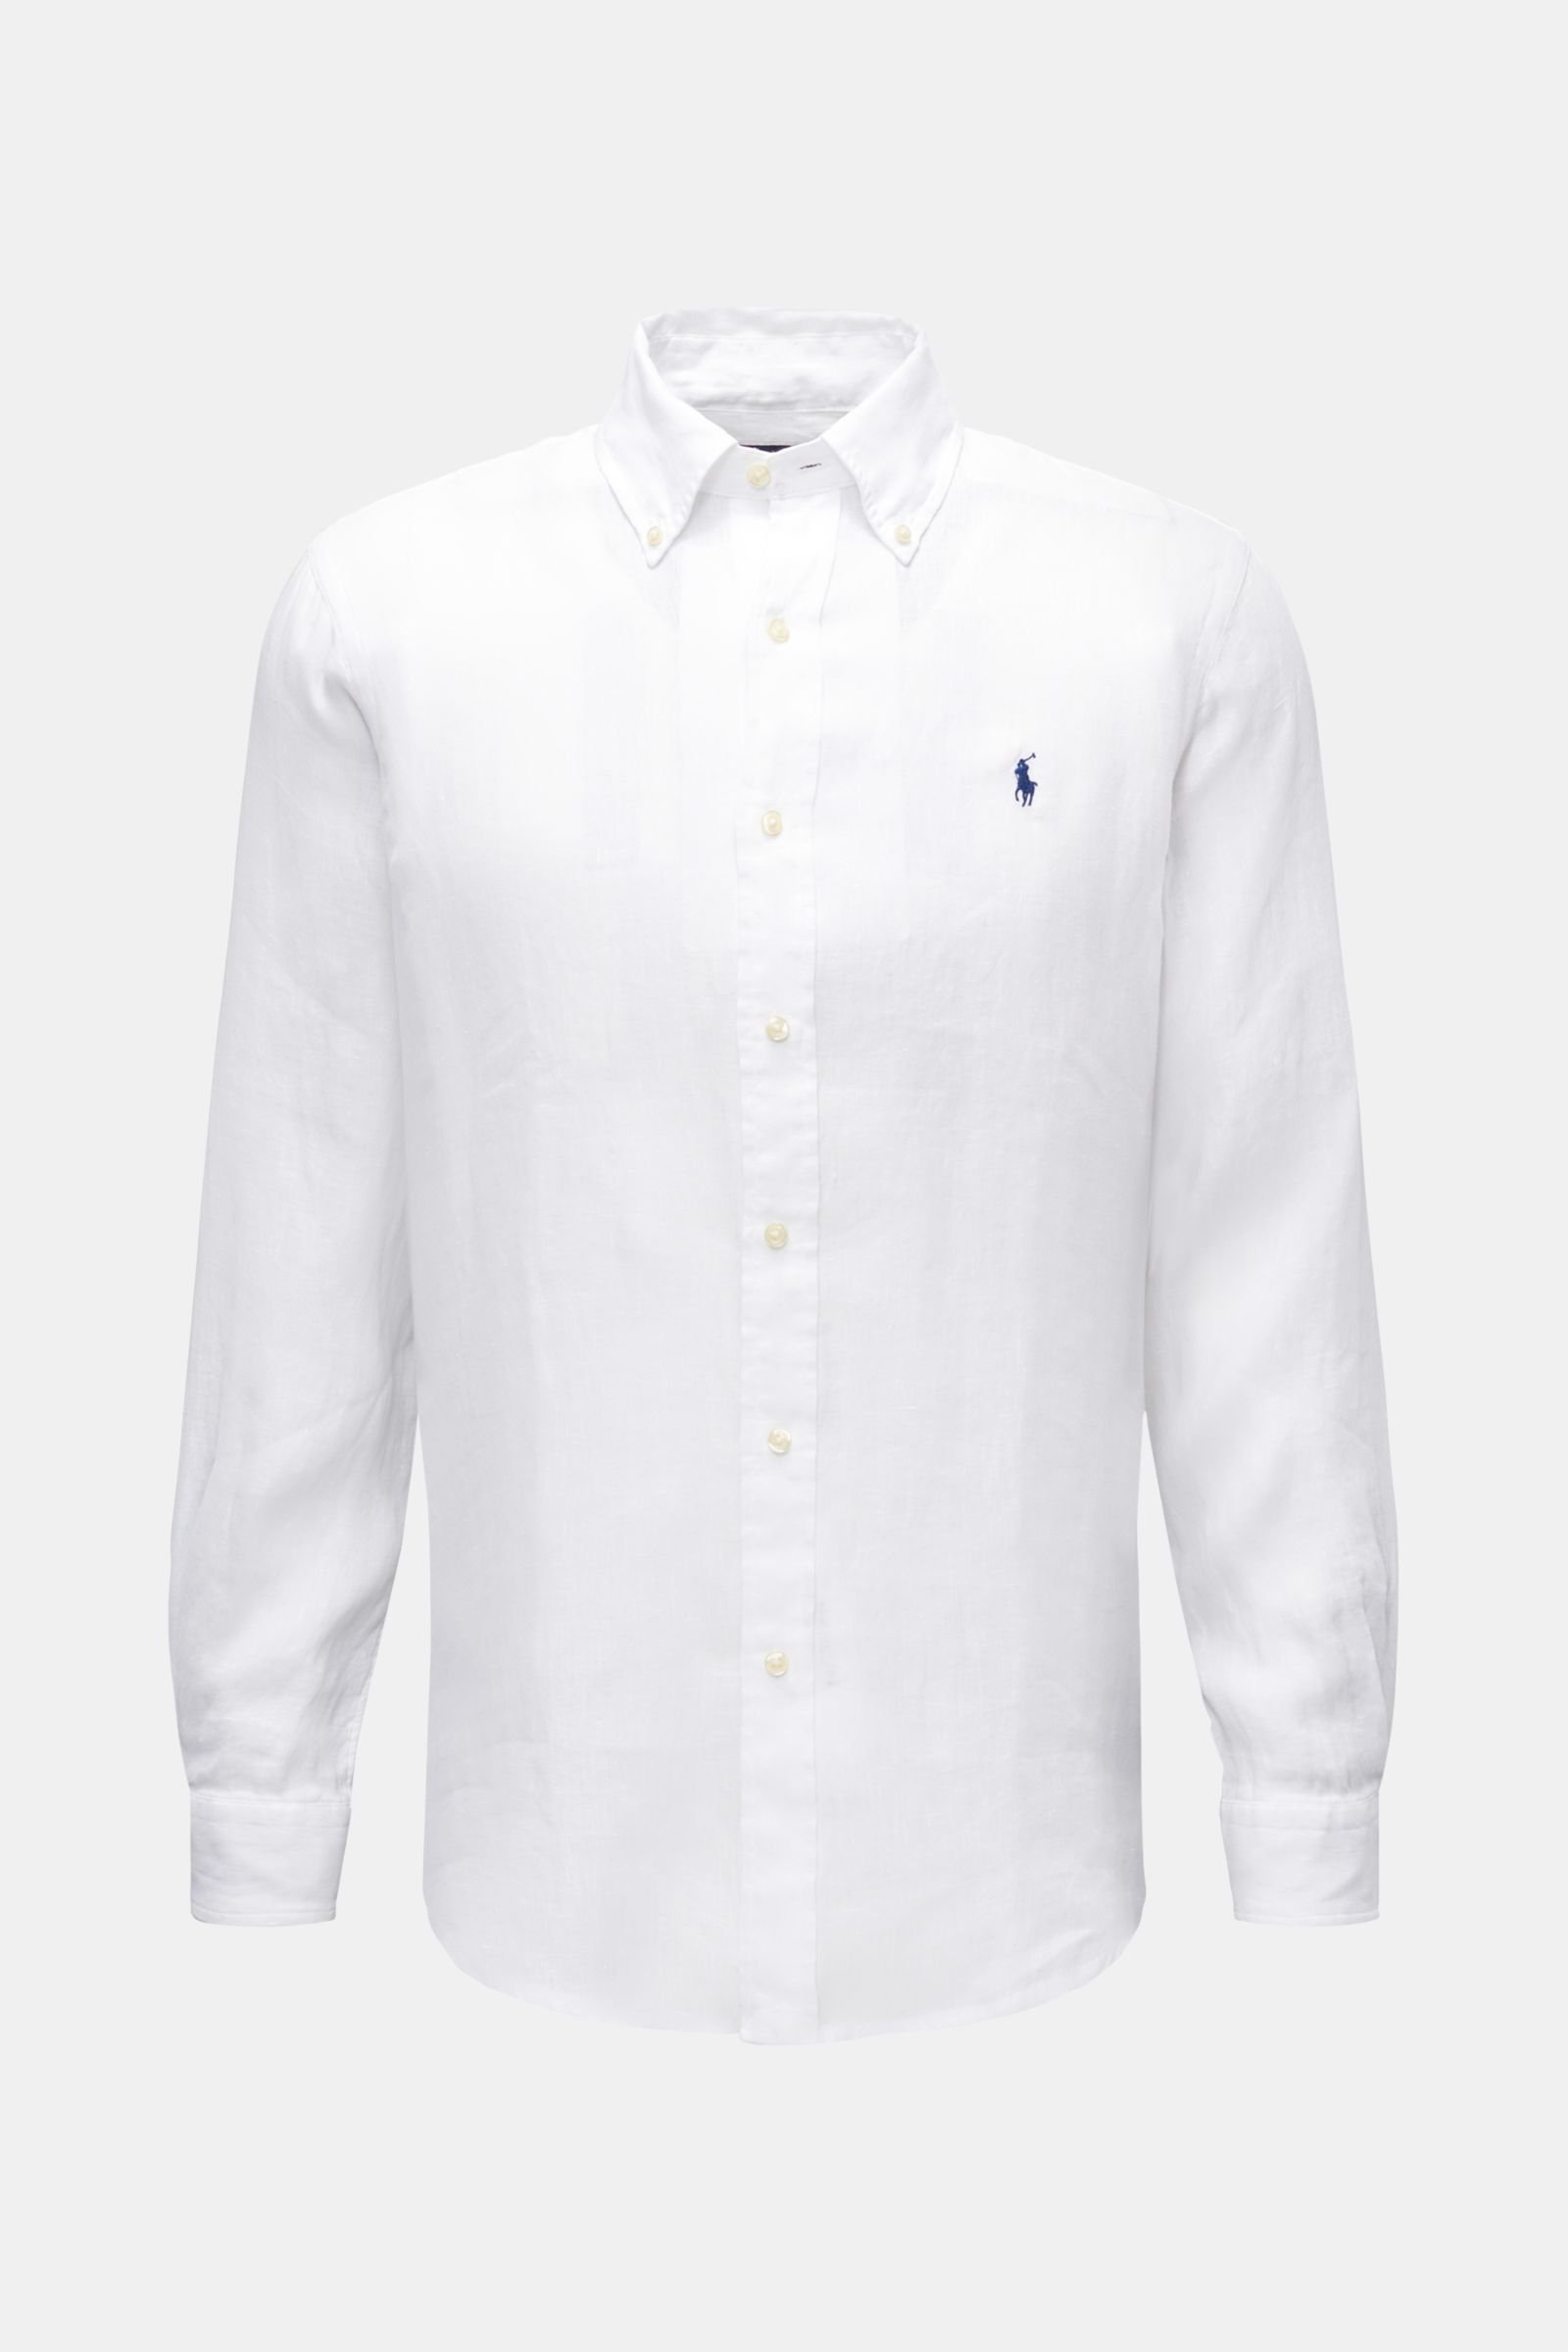 POLO RALPH LAUREN linen shirt button-down collar white | BRAUN Hamburg